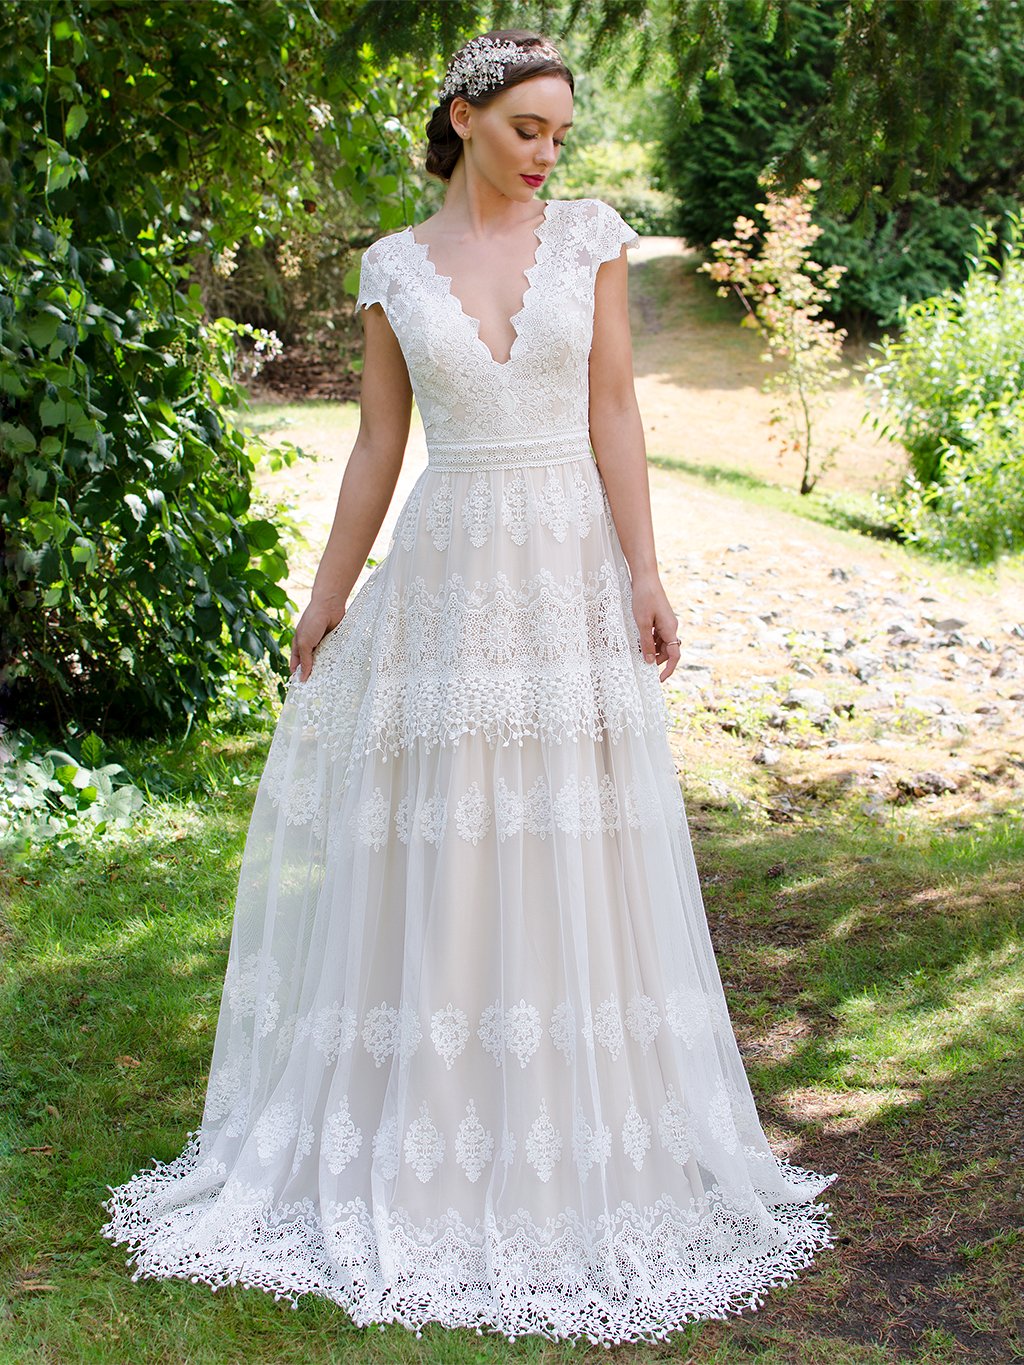 Boho lace wedding dress 5001-wedding-dress-5001